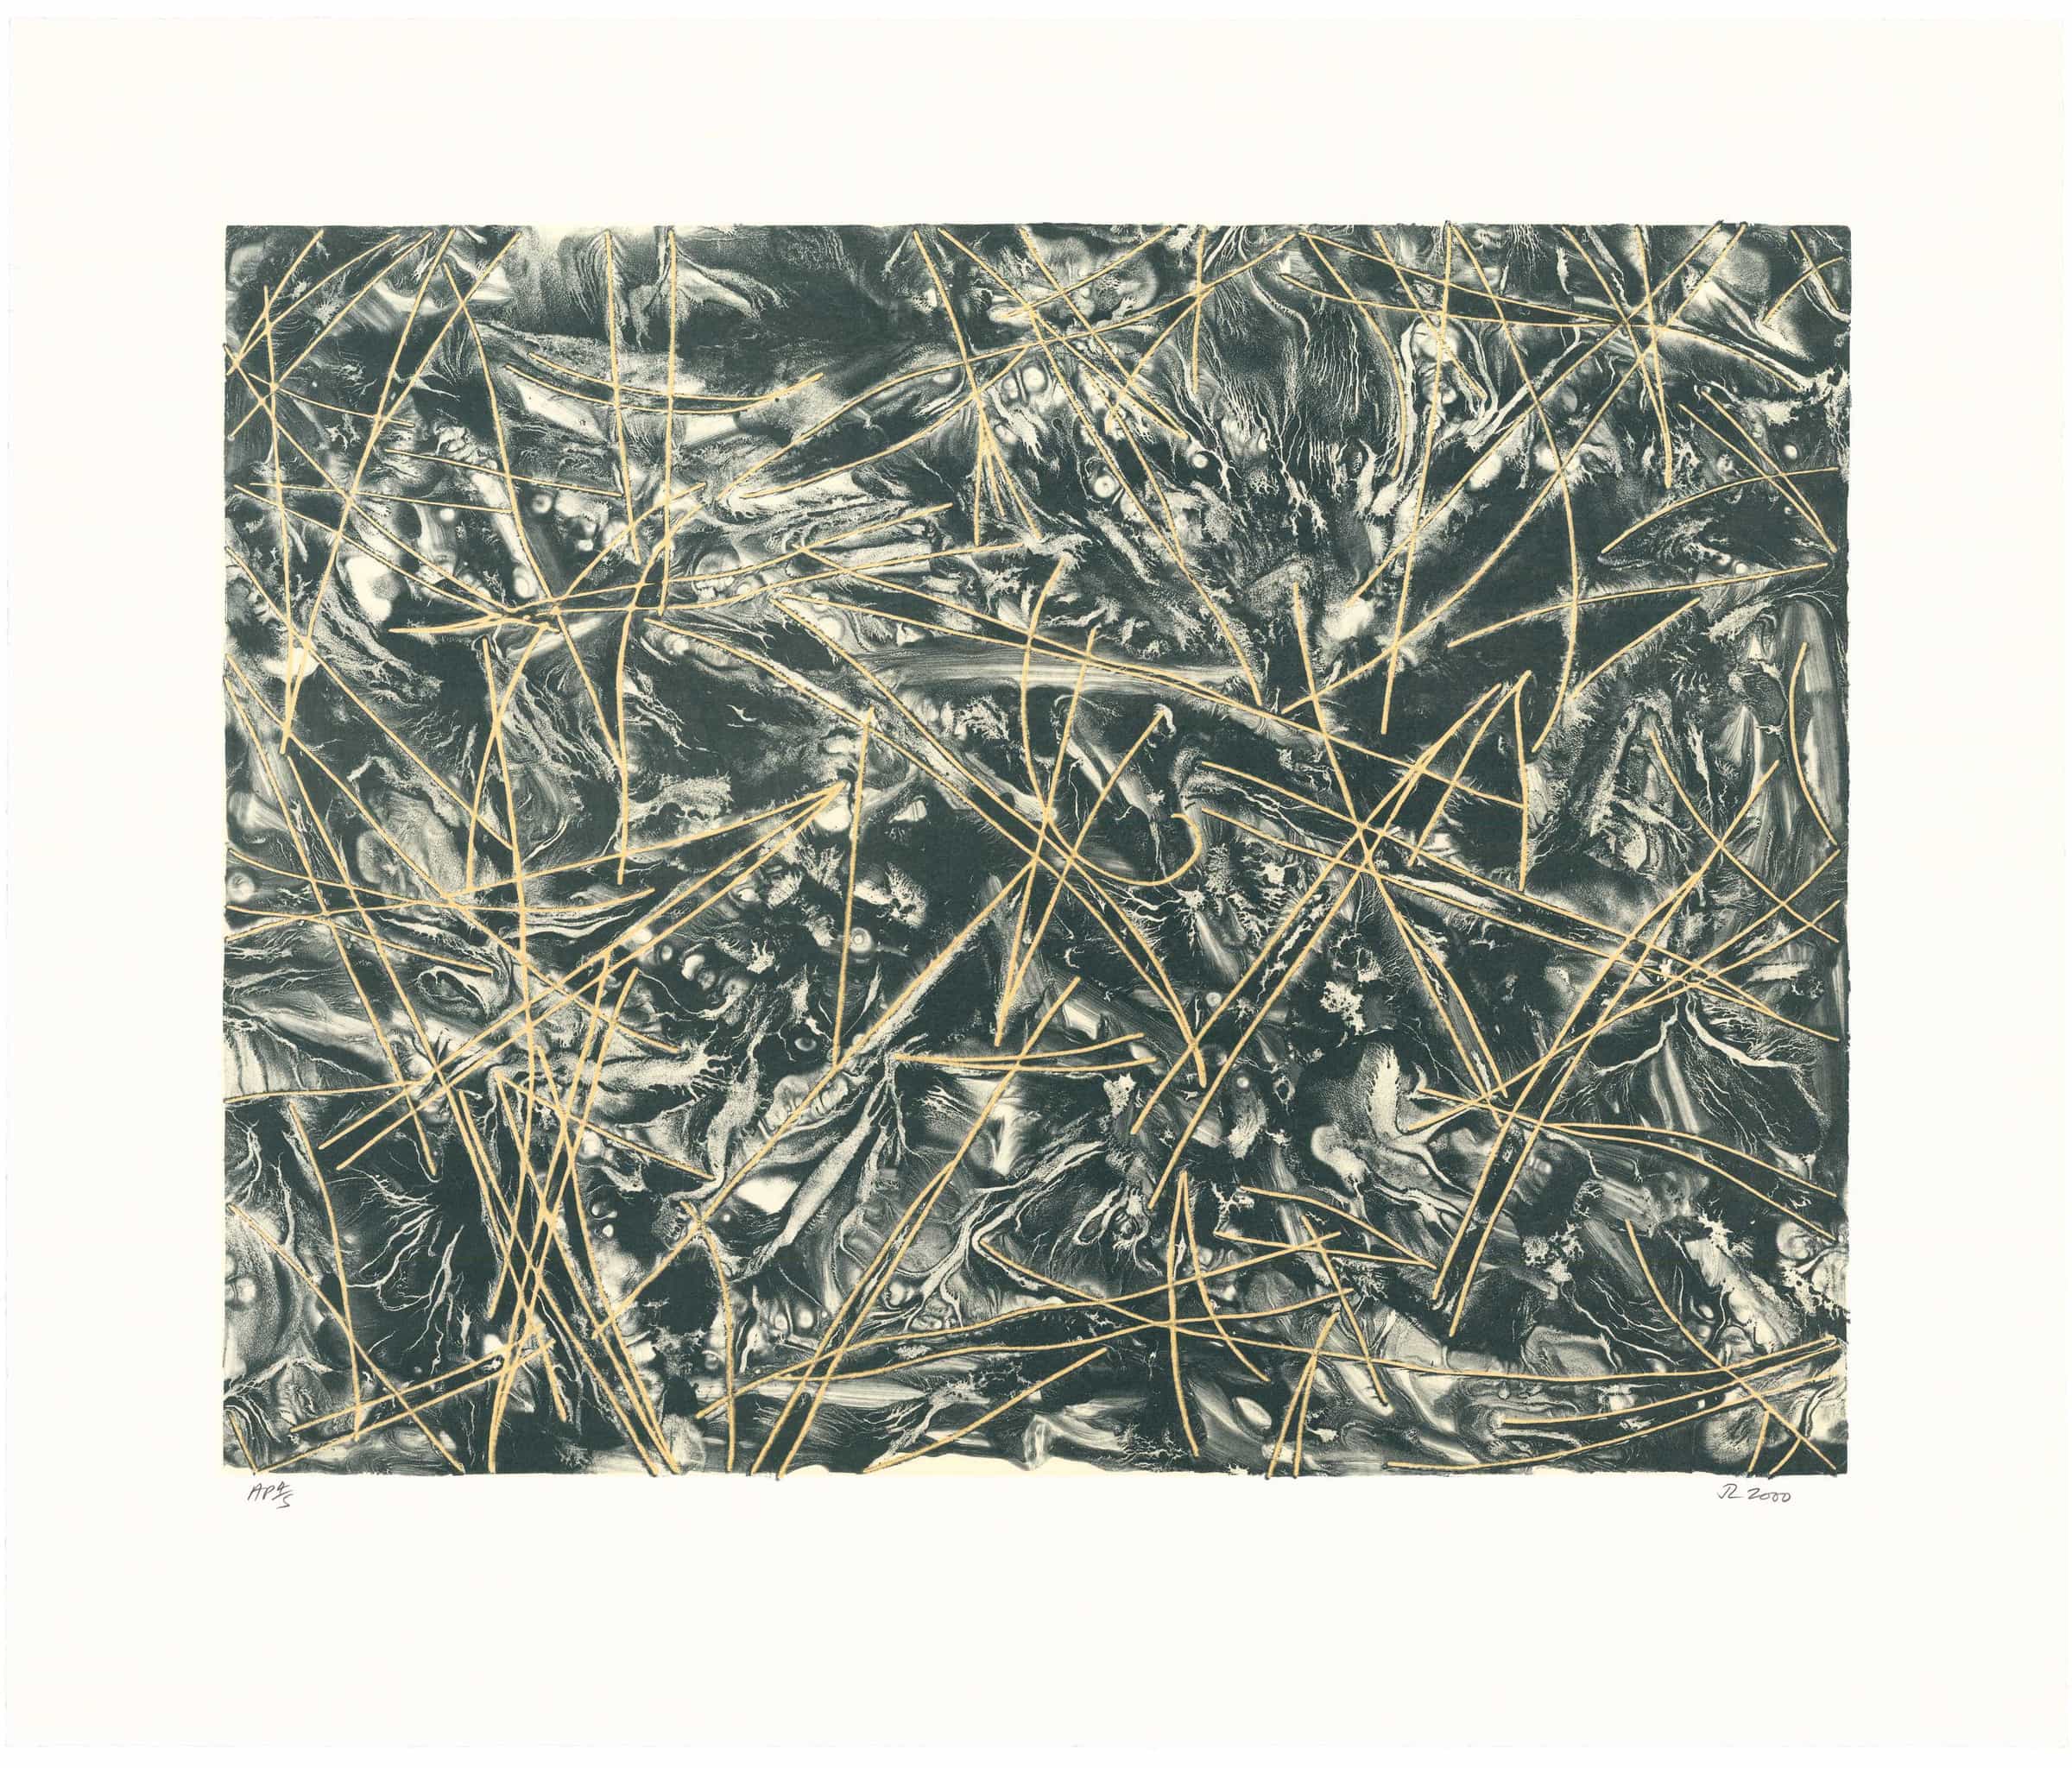 Julian Lethbridge, Untitled (Pine Needles Green), 2000